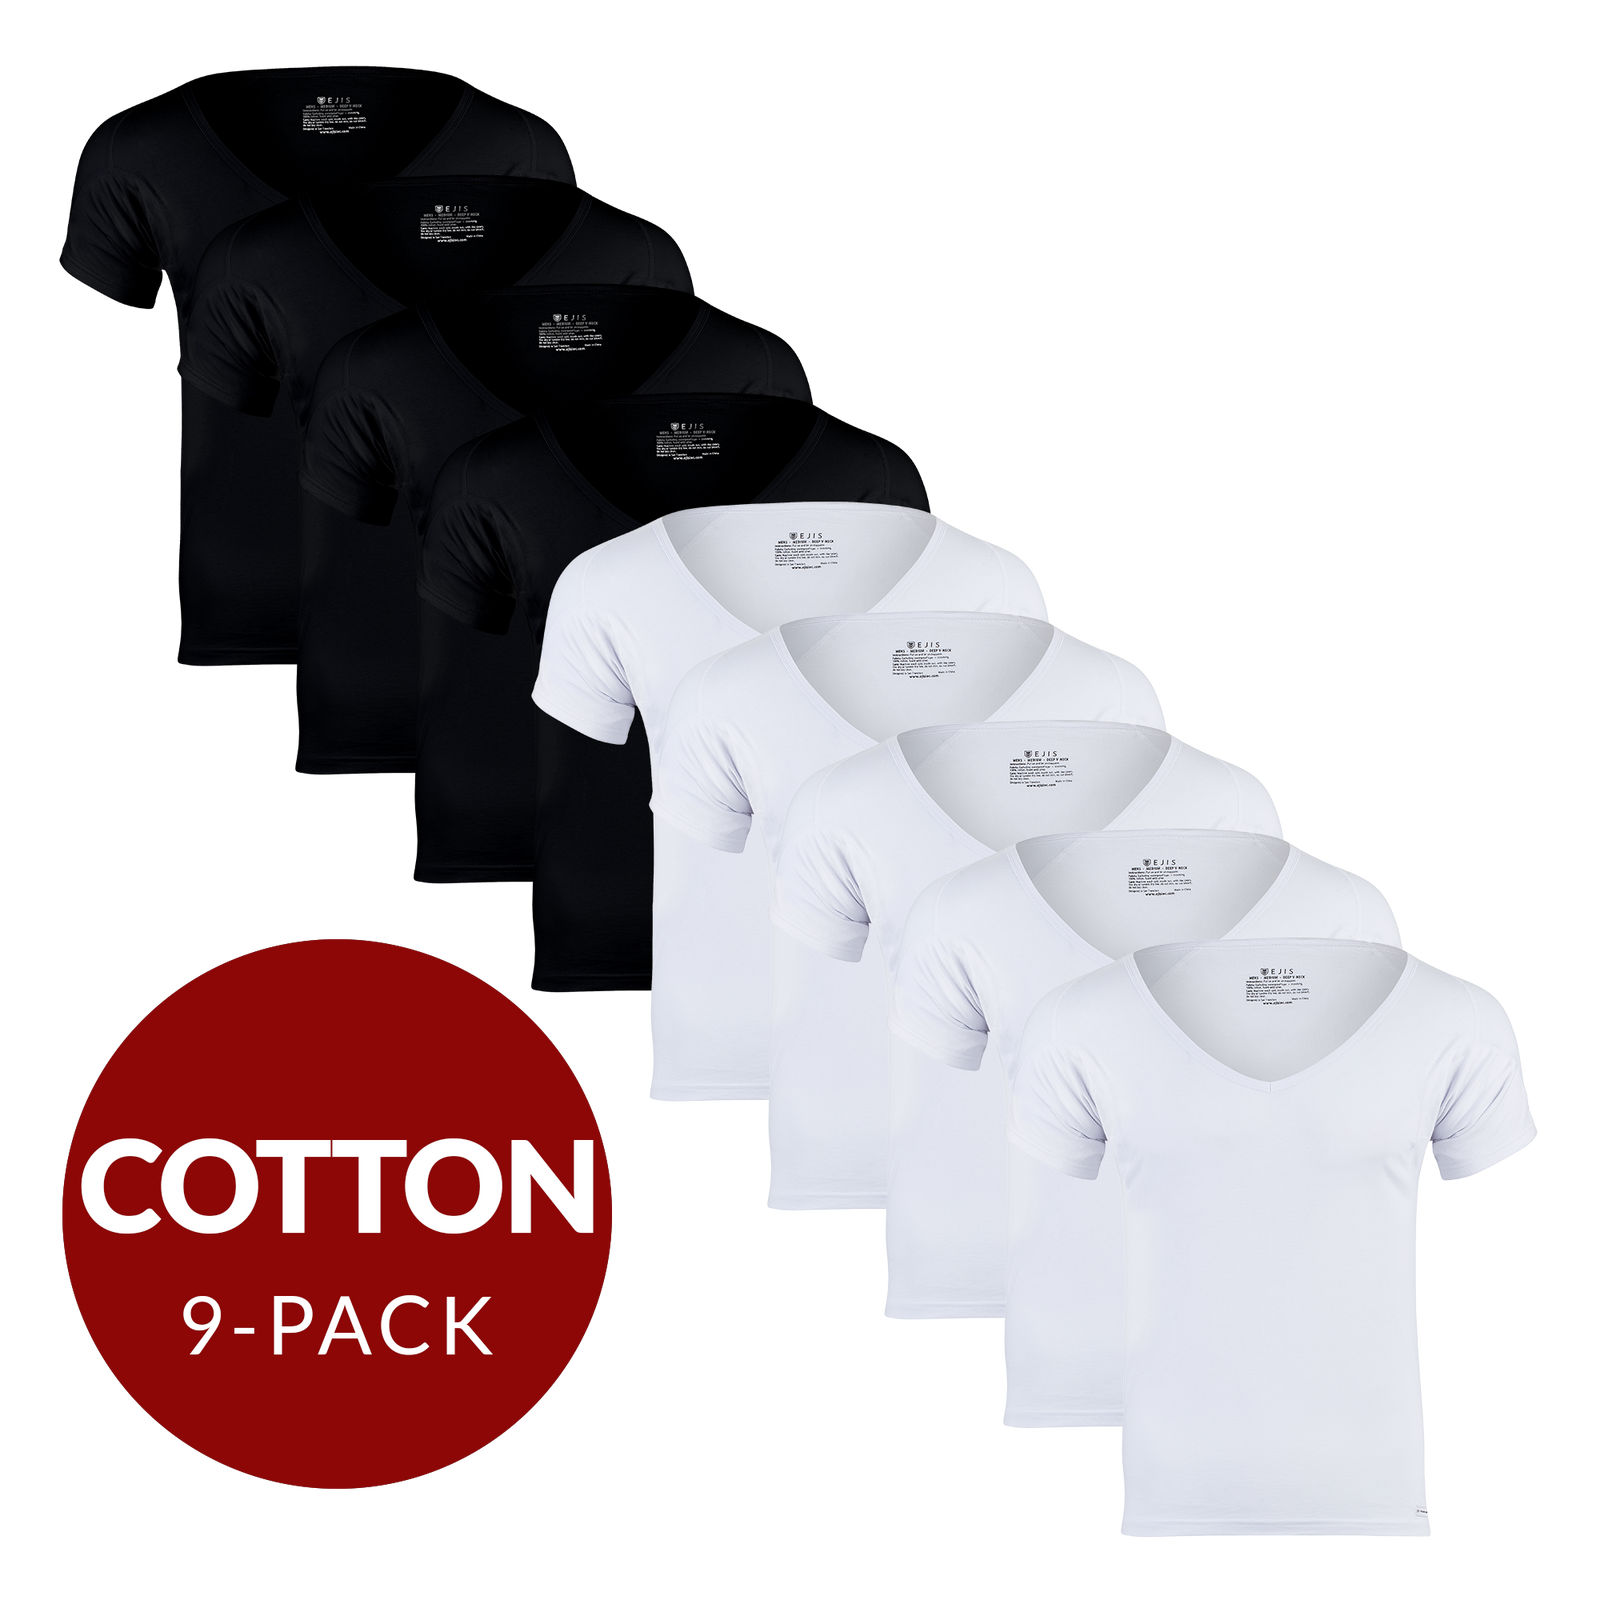 Deep V Cotton Sweat Proof Undershirt For Men - Mix 9-Pack (5x White, 4x Black) - Ejis